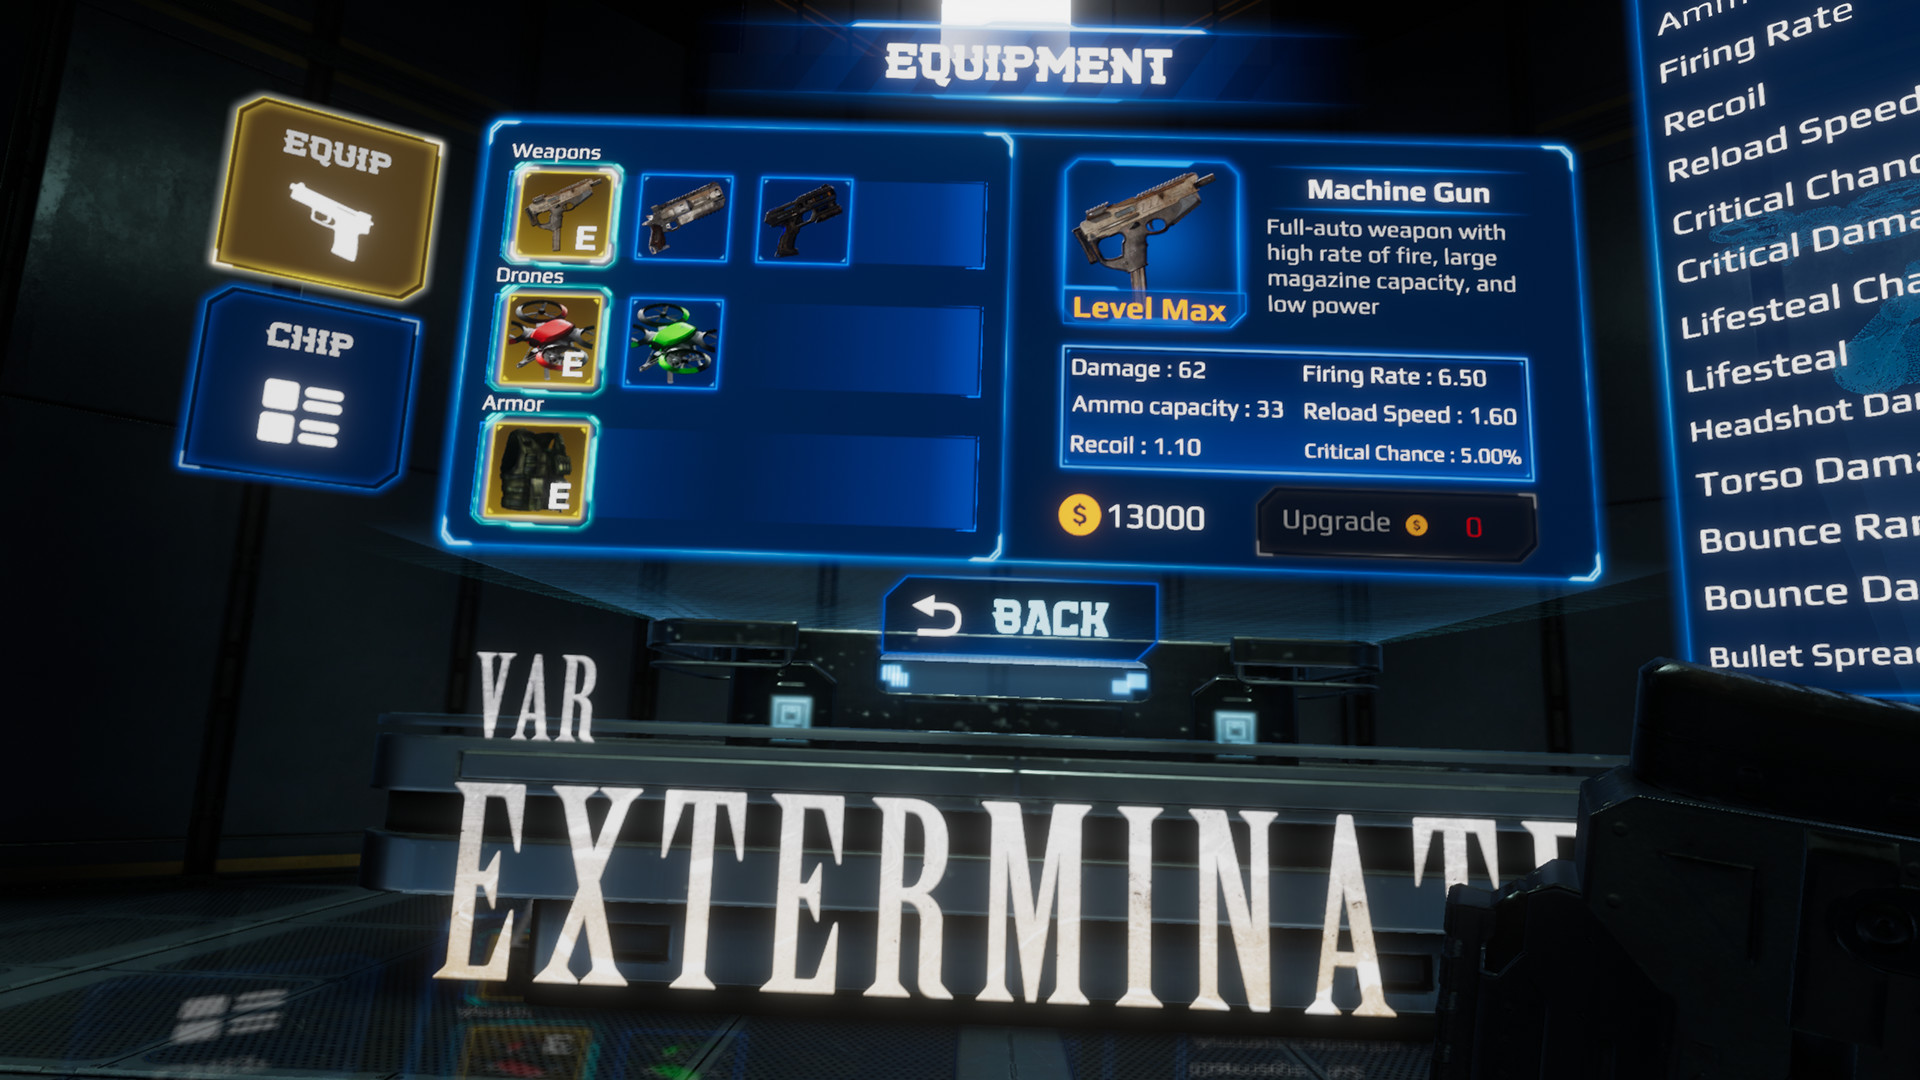 VAR: Exterminate screenshot